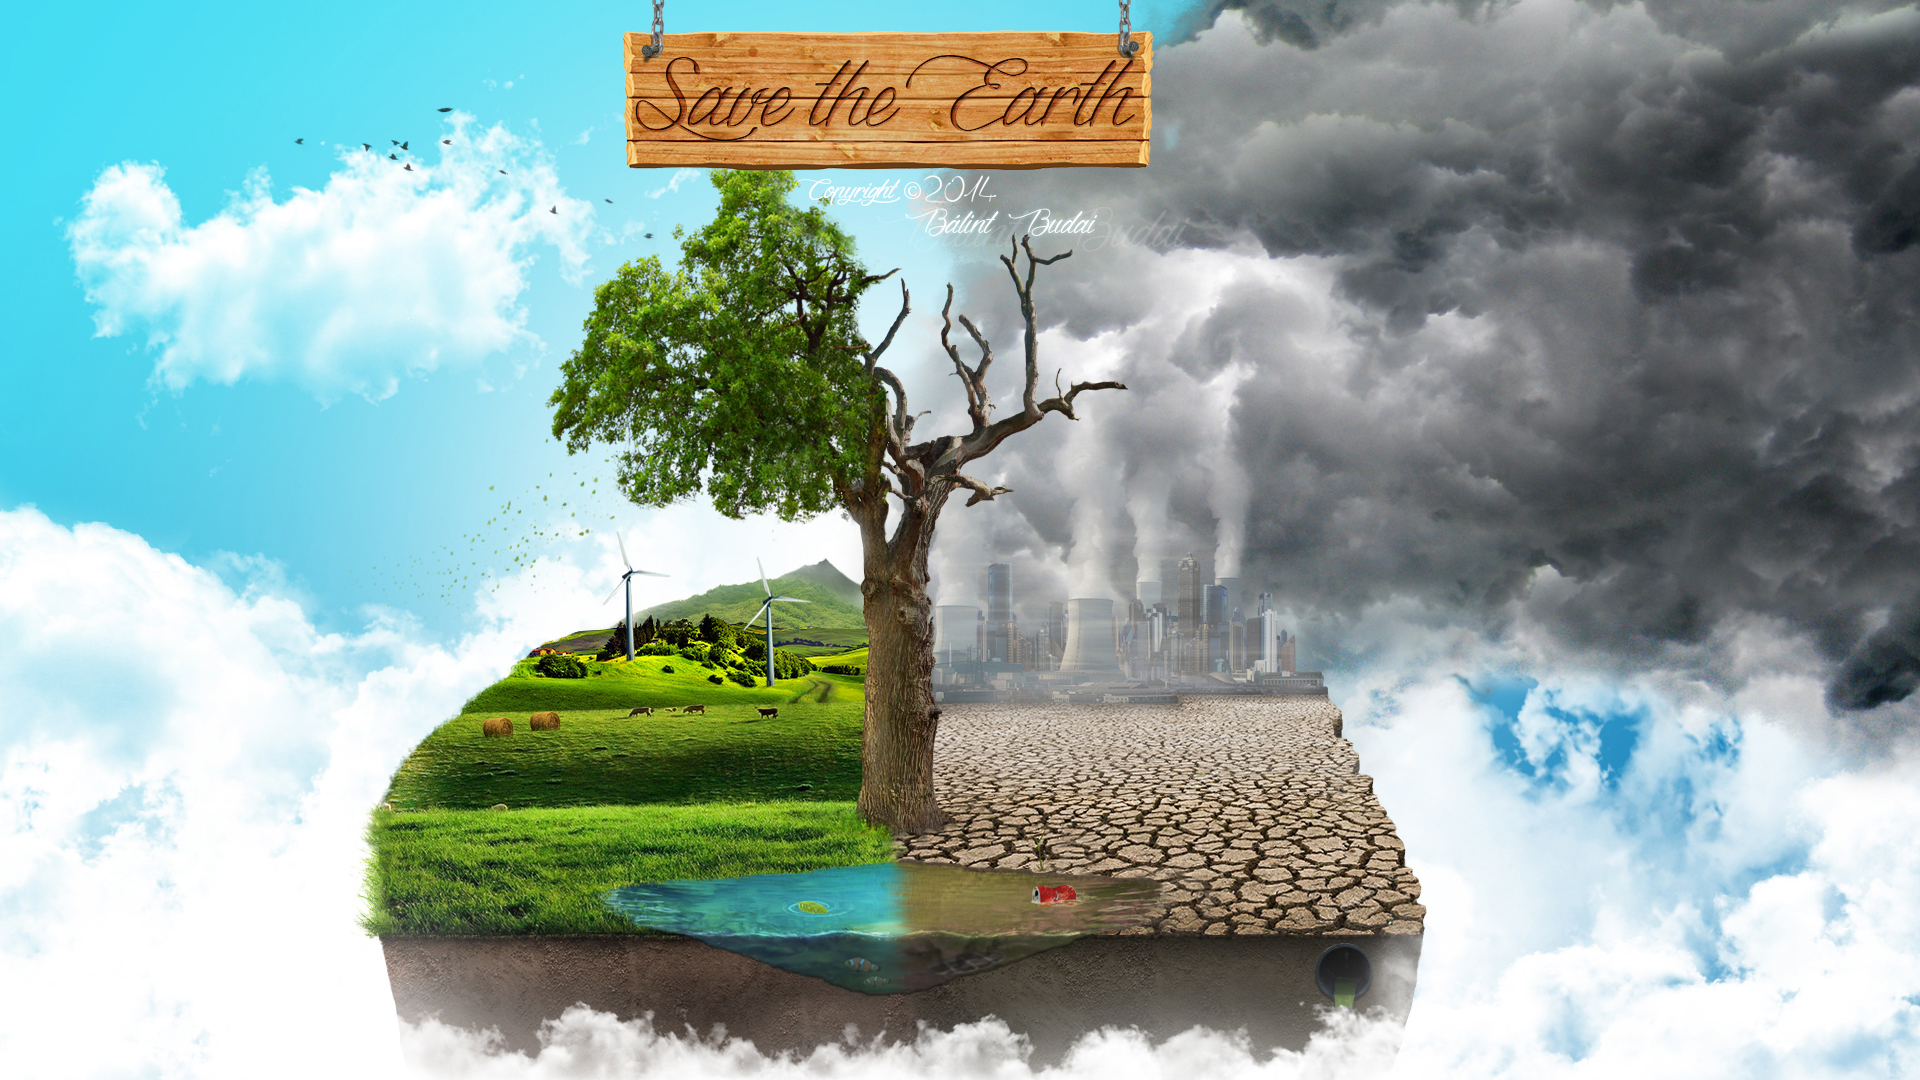 General 1920x1080 environment pollution digital art artwork nature industrial clouds sky blue Earth 2014 (Year) Bálint Budai